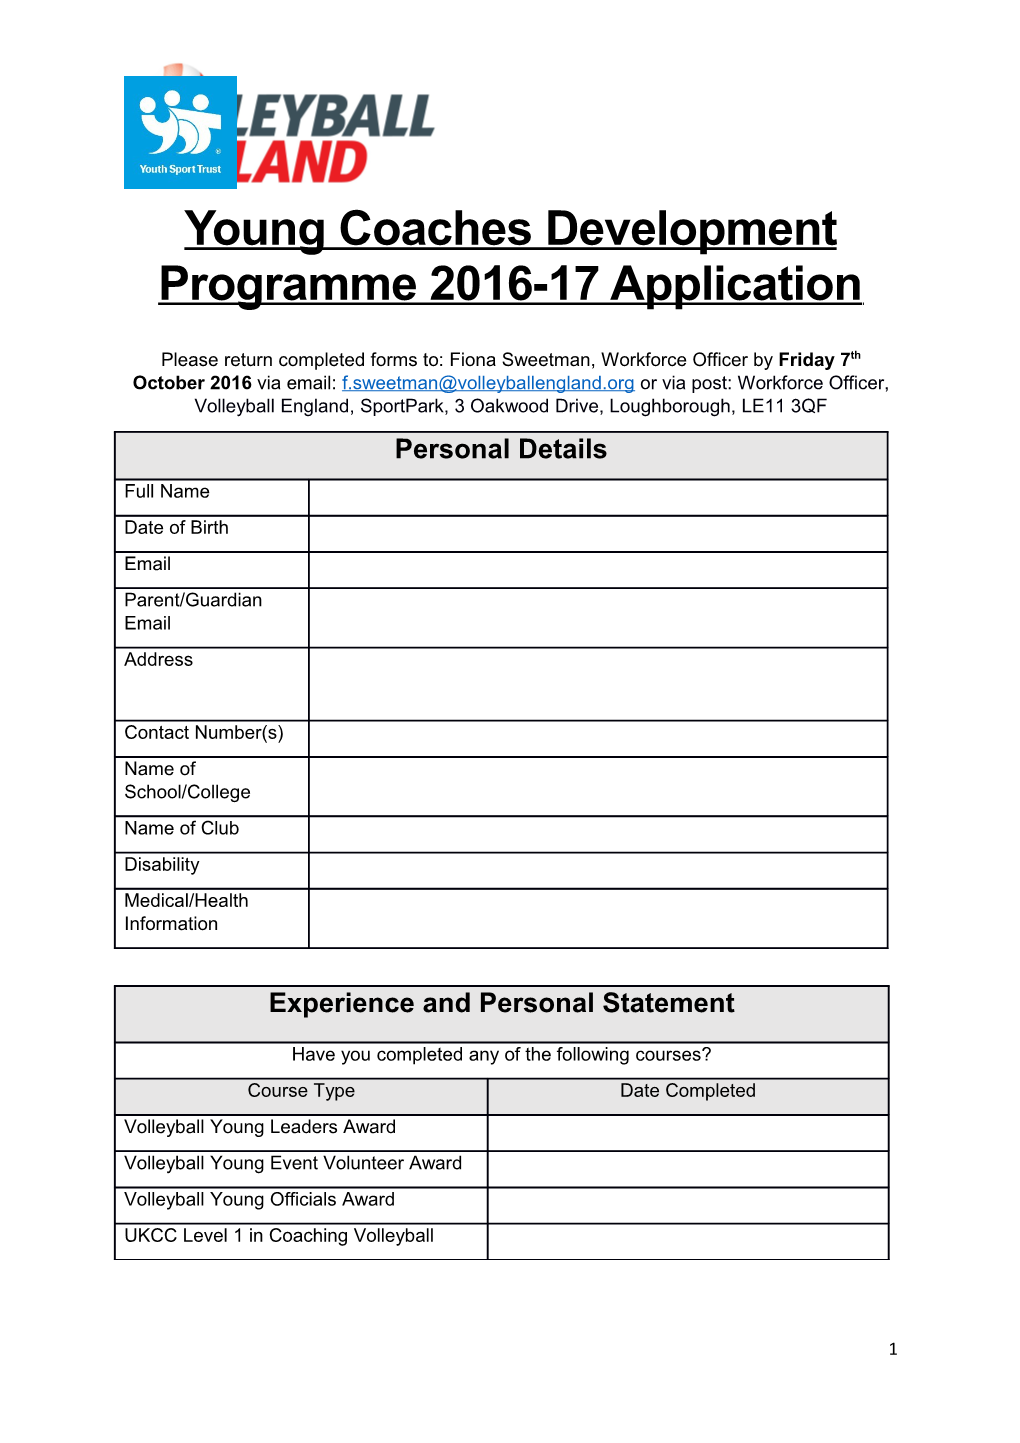 Young Coaches Development Programme 2016-17 Application